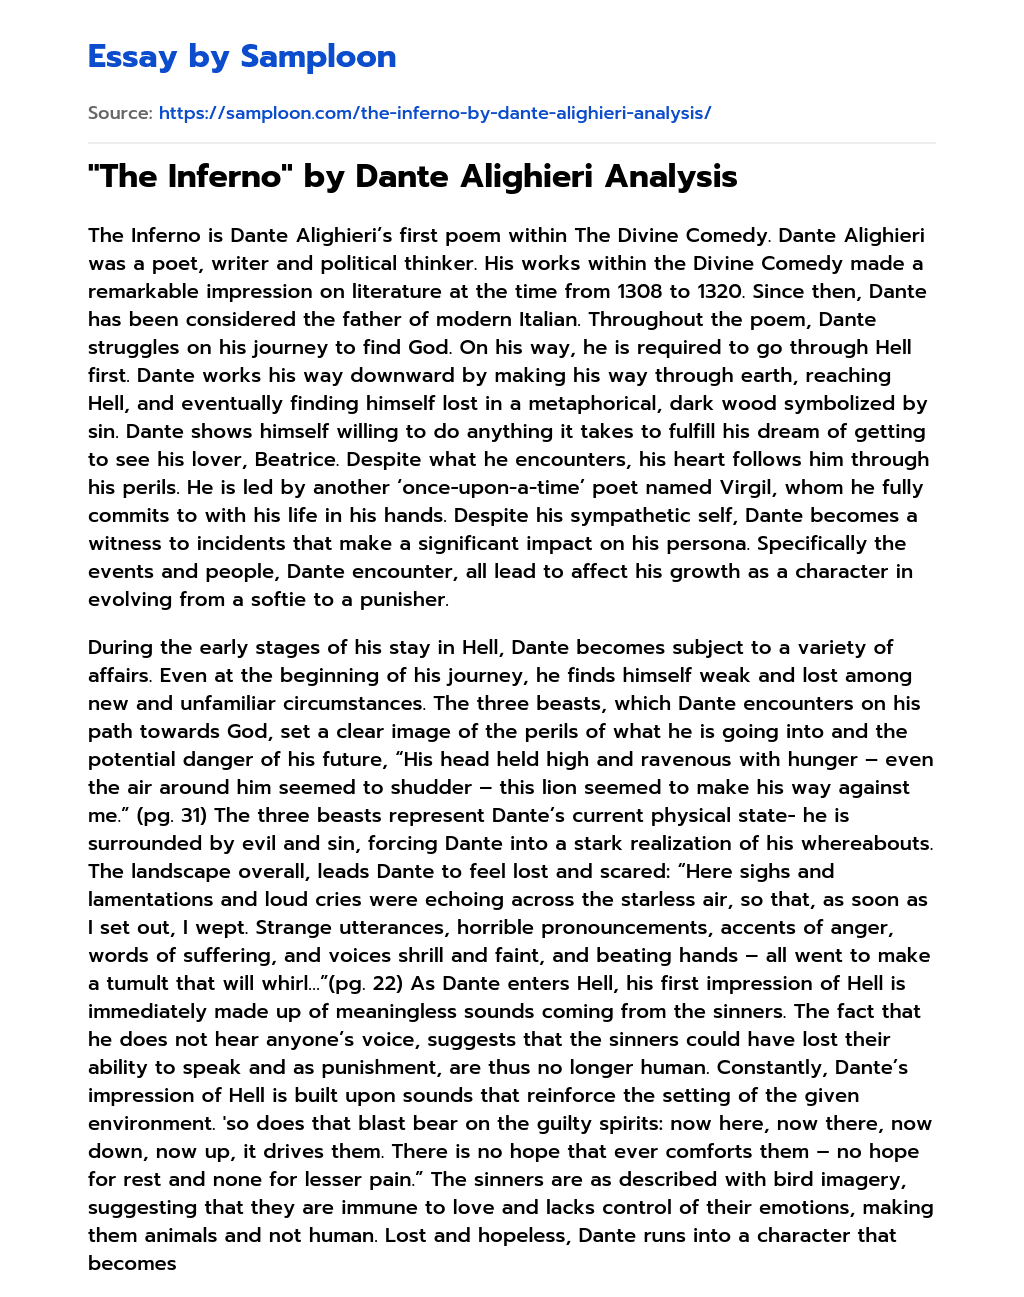 “The Inferno” by Dante Alighieri Analysis essay